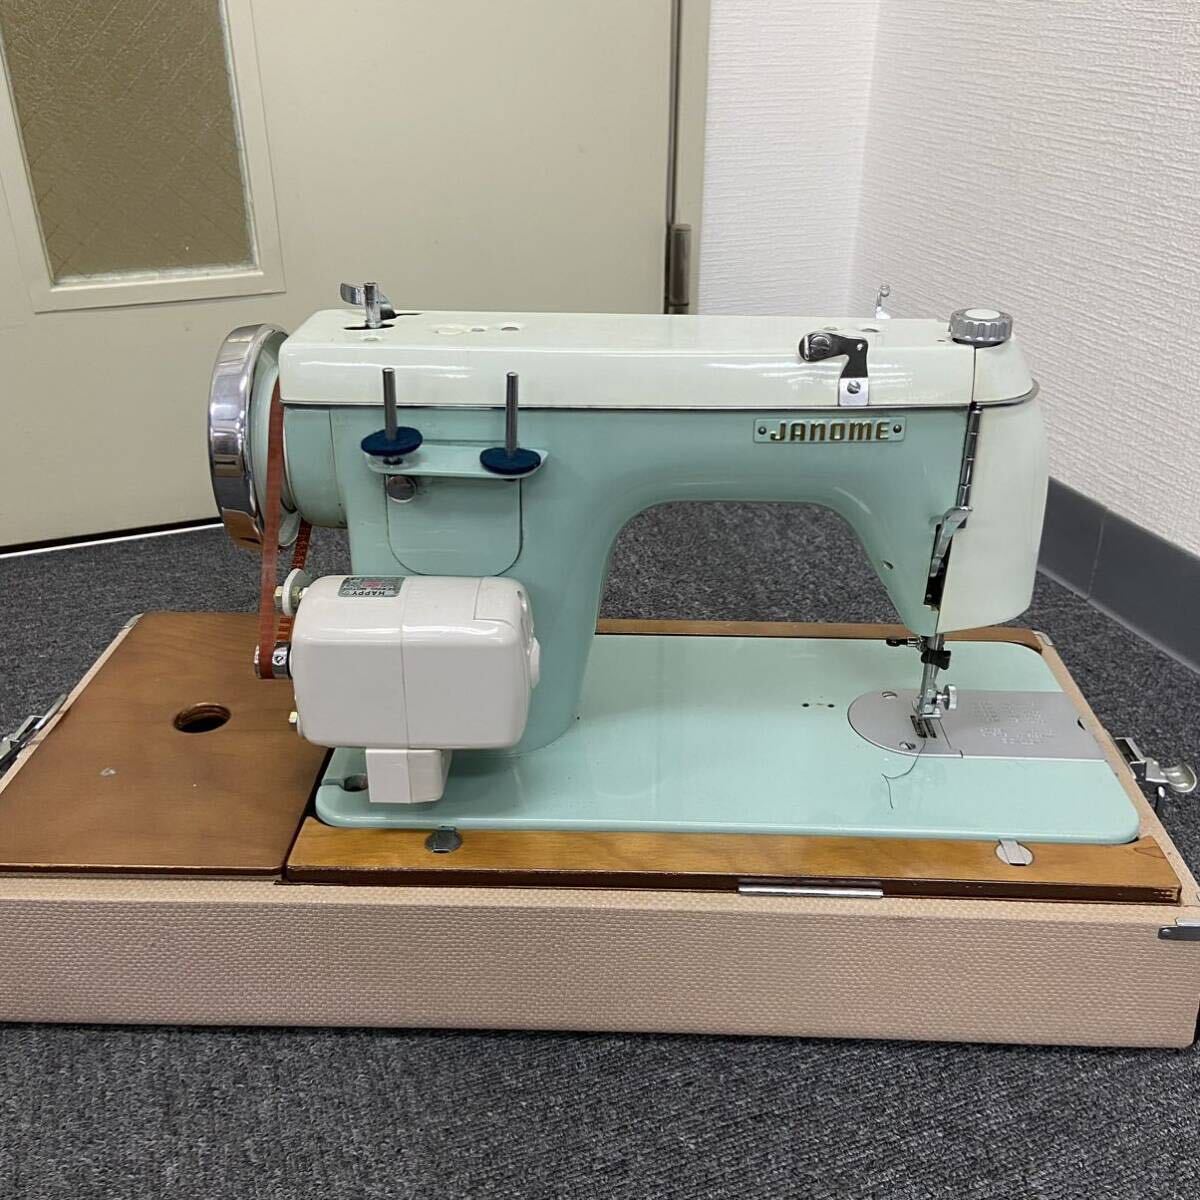 U4 JANOME ジャノメミシン MODEL-365 Sewing Machine 昭和レトロ アンティーク 手工芸 備品 フットコントローラー付 手芸 裁縫 の画像5